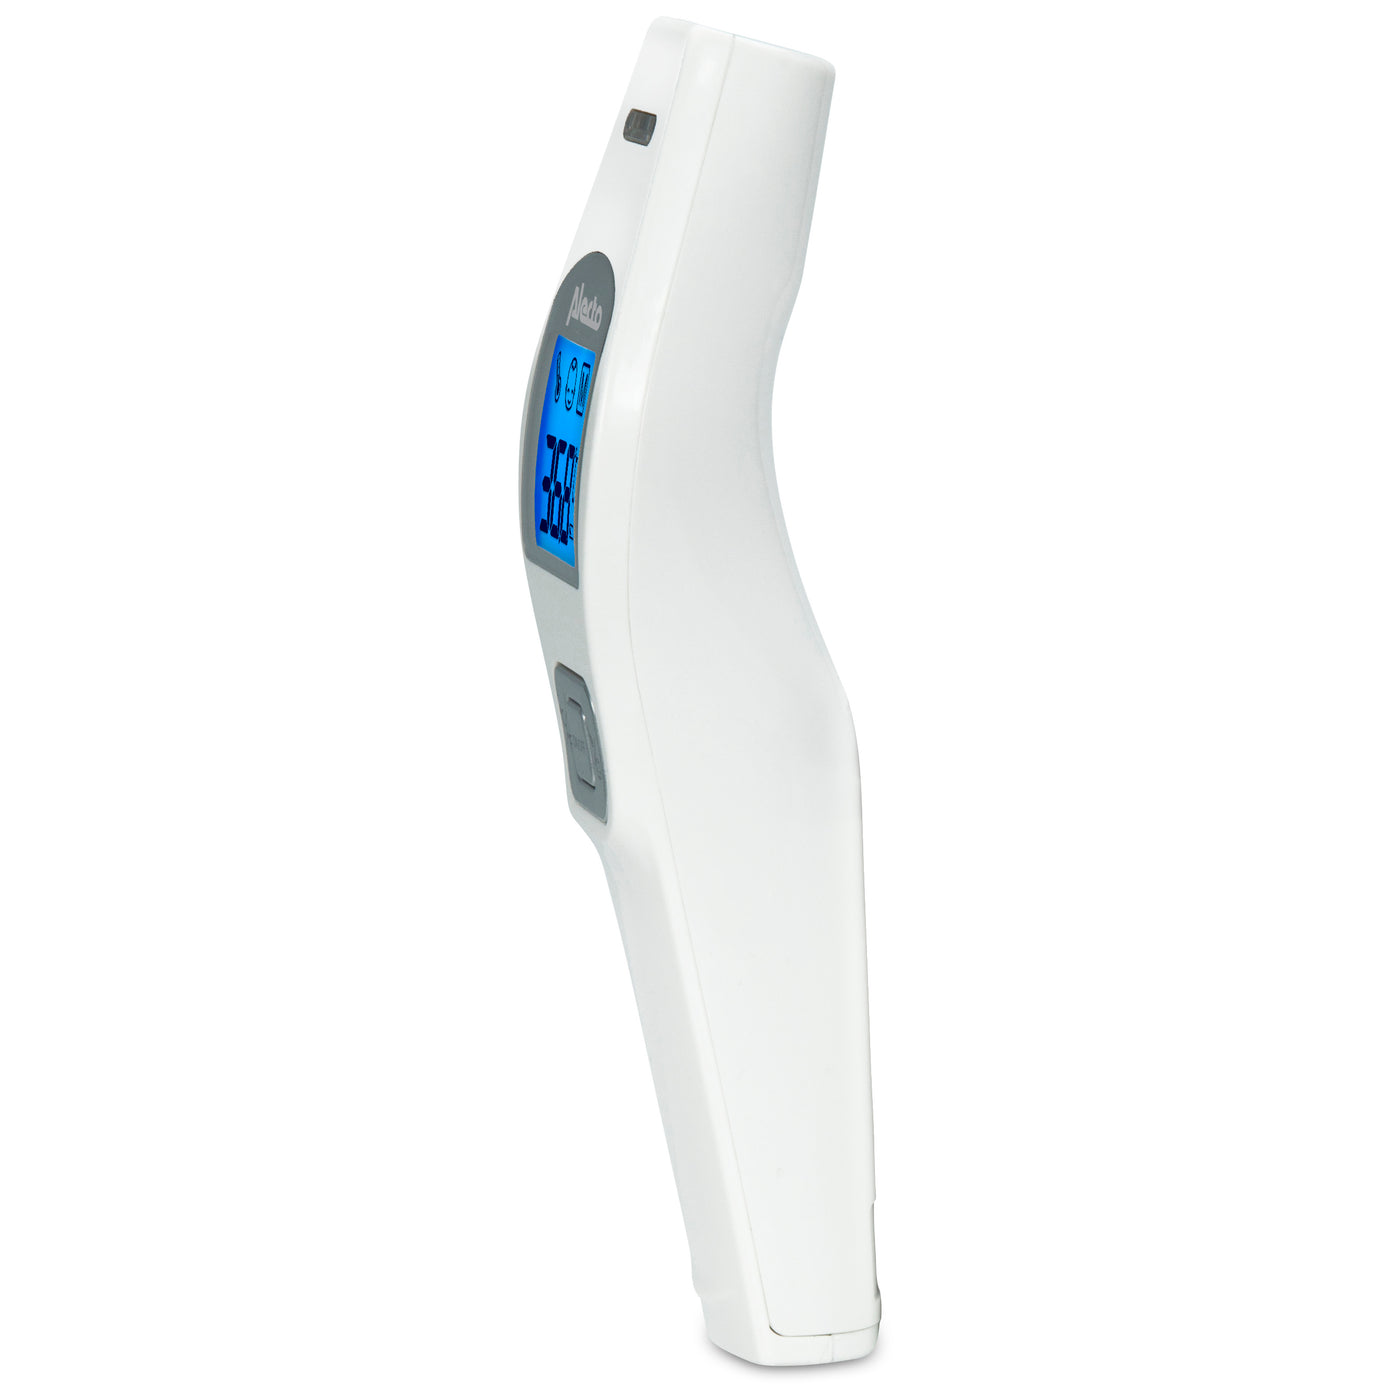 Alecto BC-37 - Voorhoofdthermometer, infrarood, wit